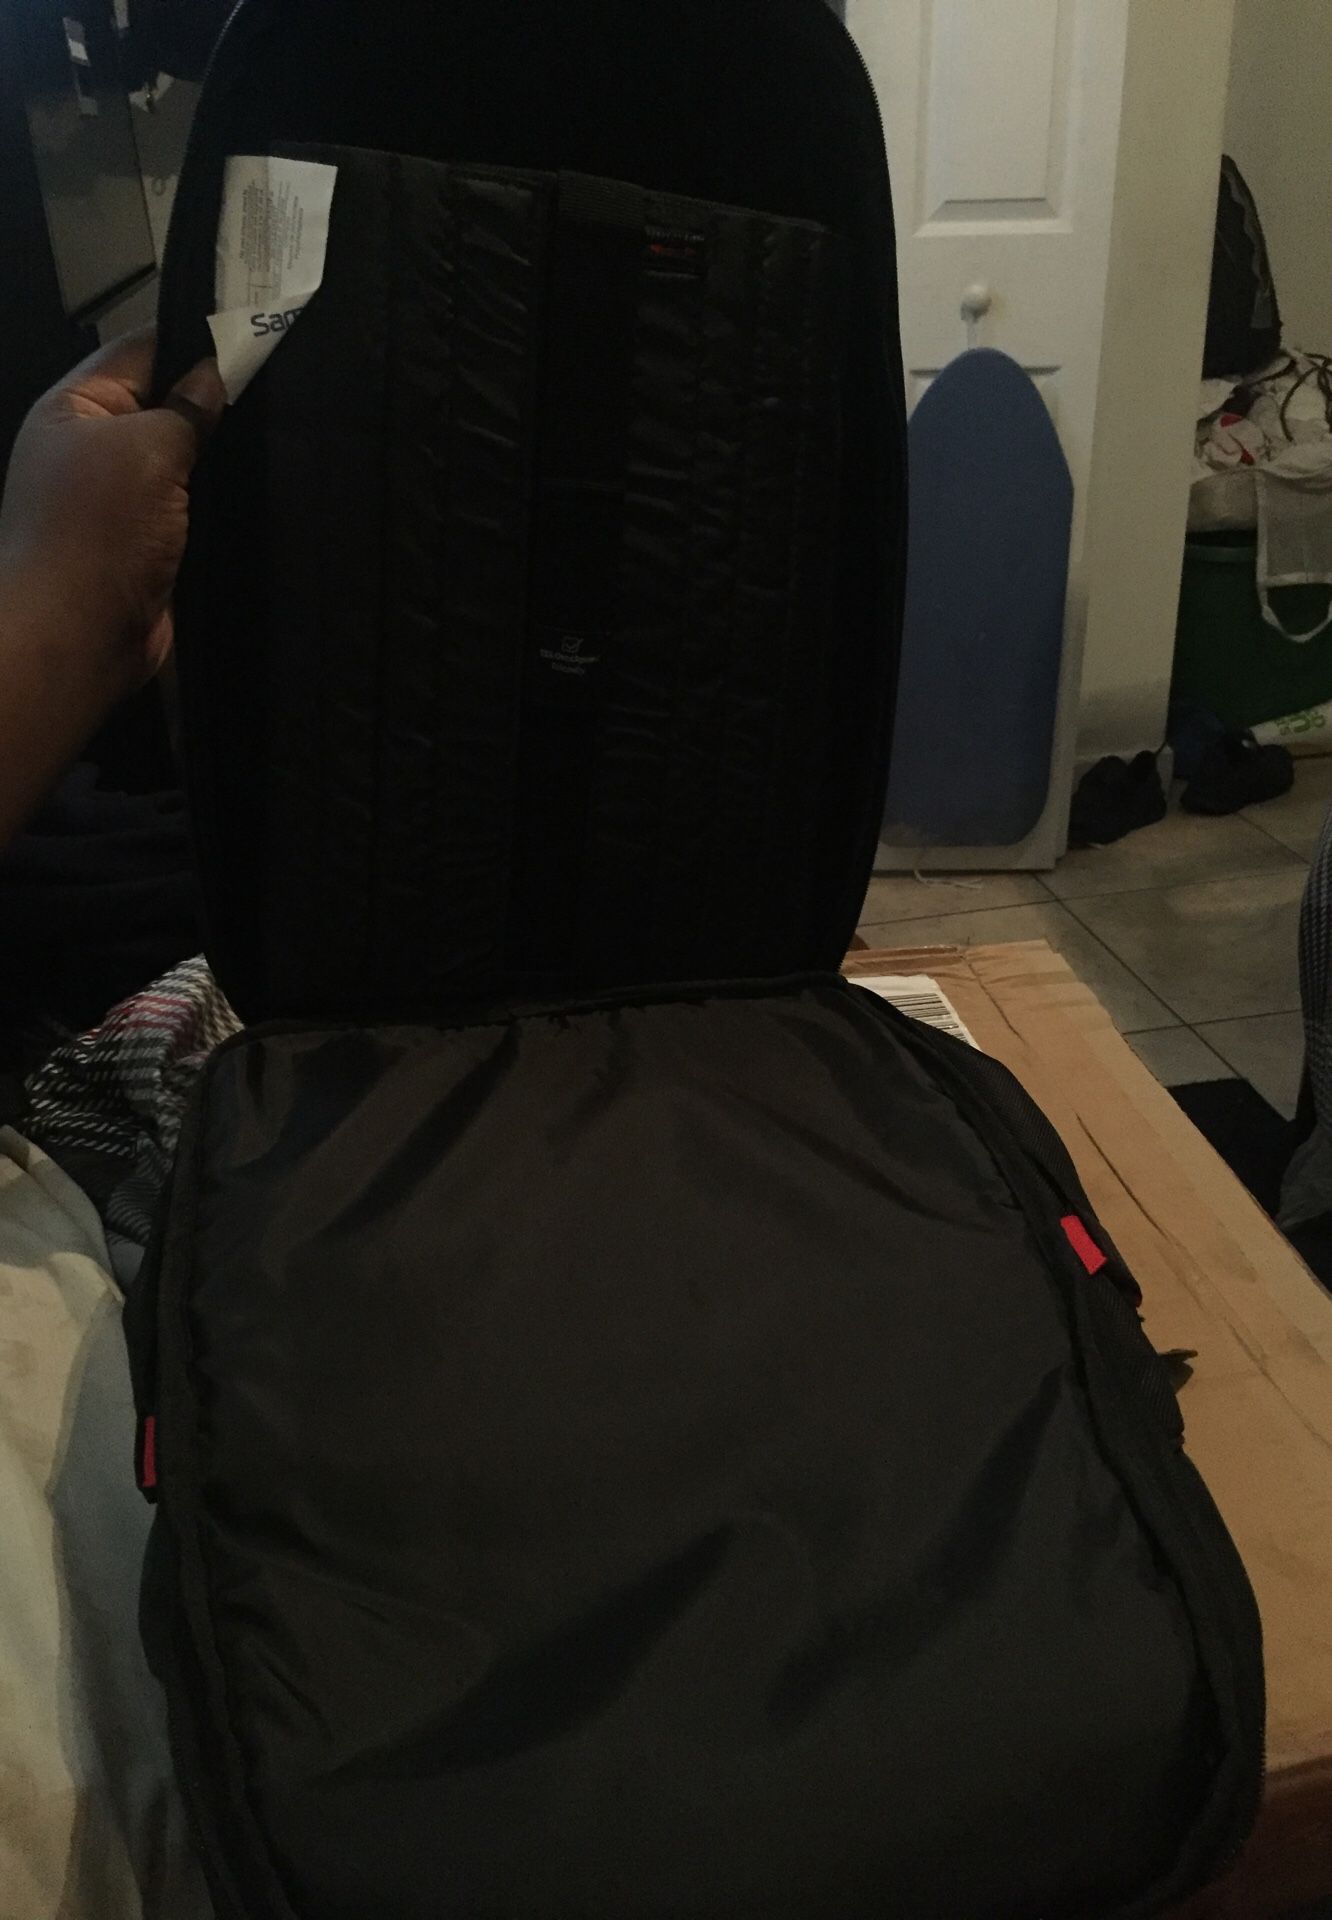 Sam nite tectonic pft laptop backpack